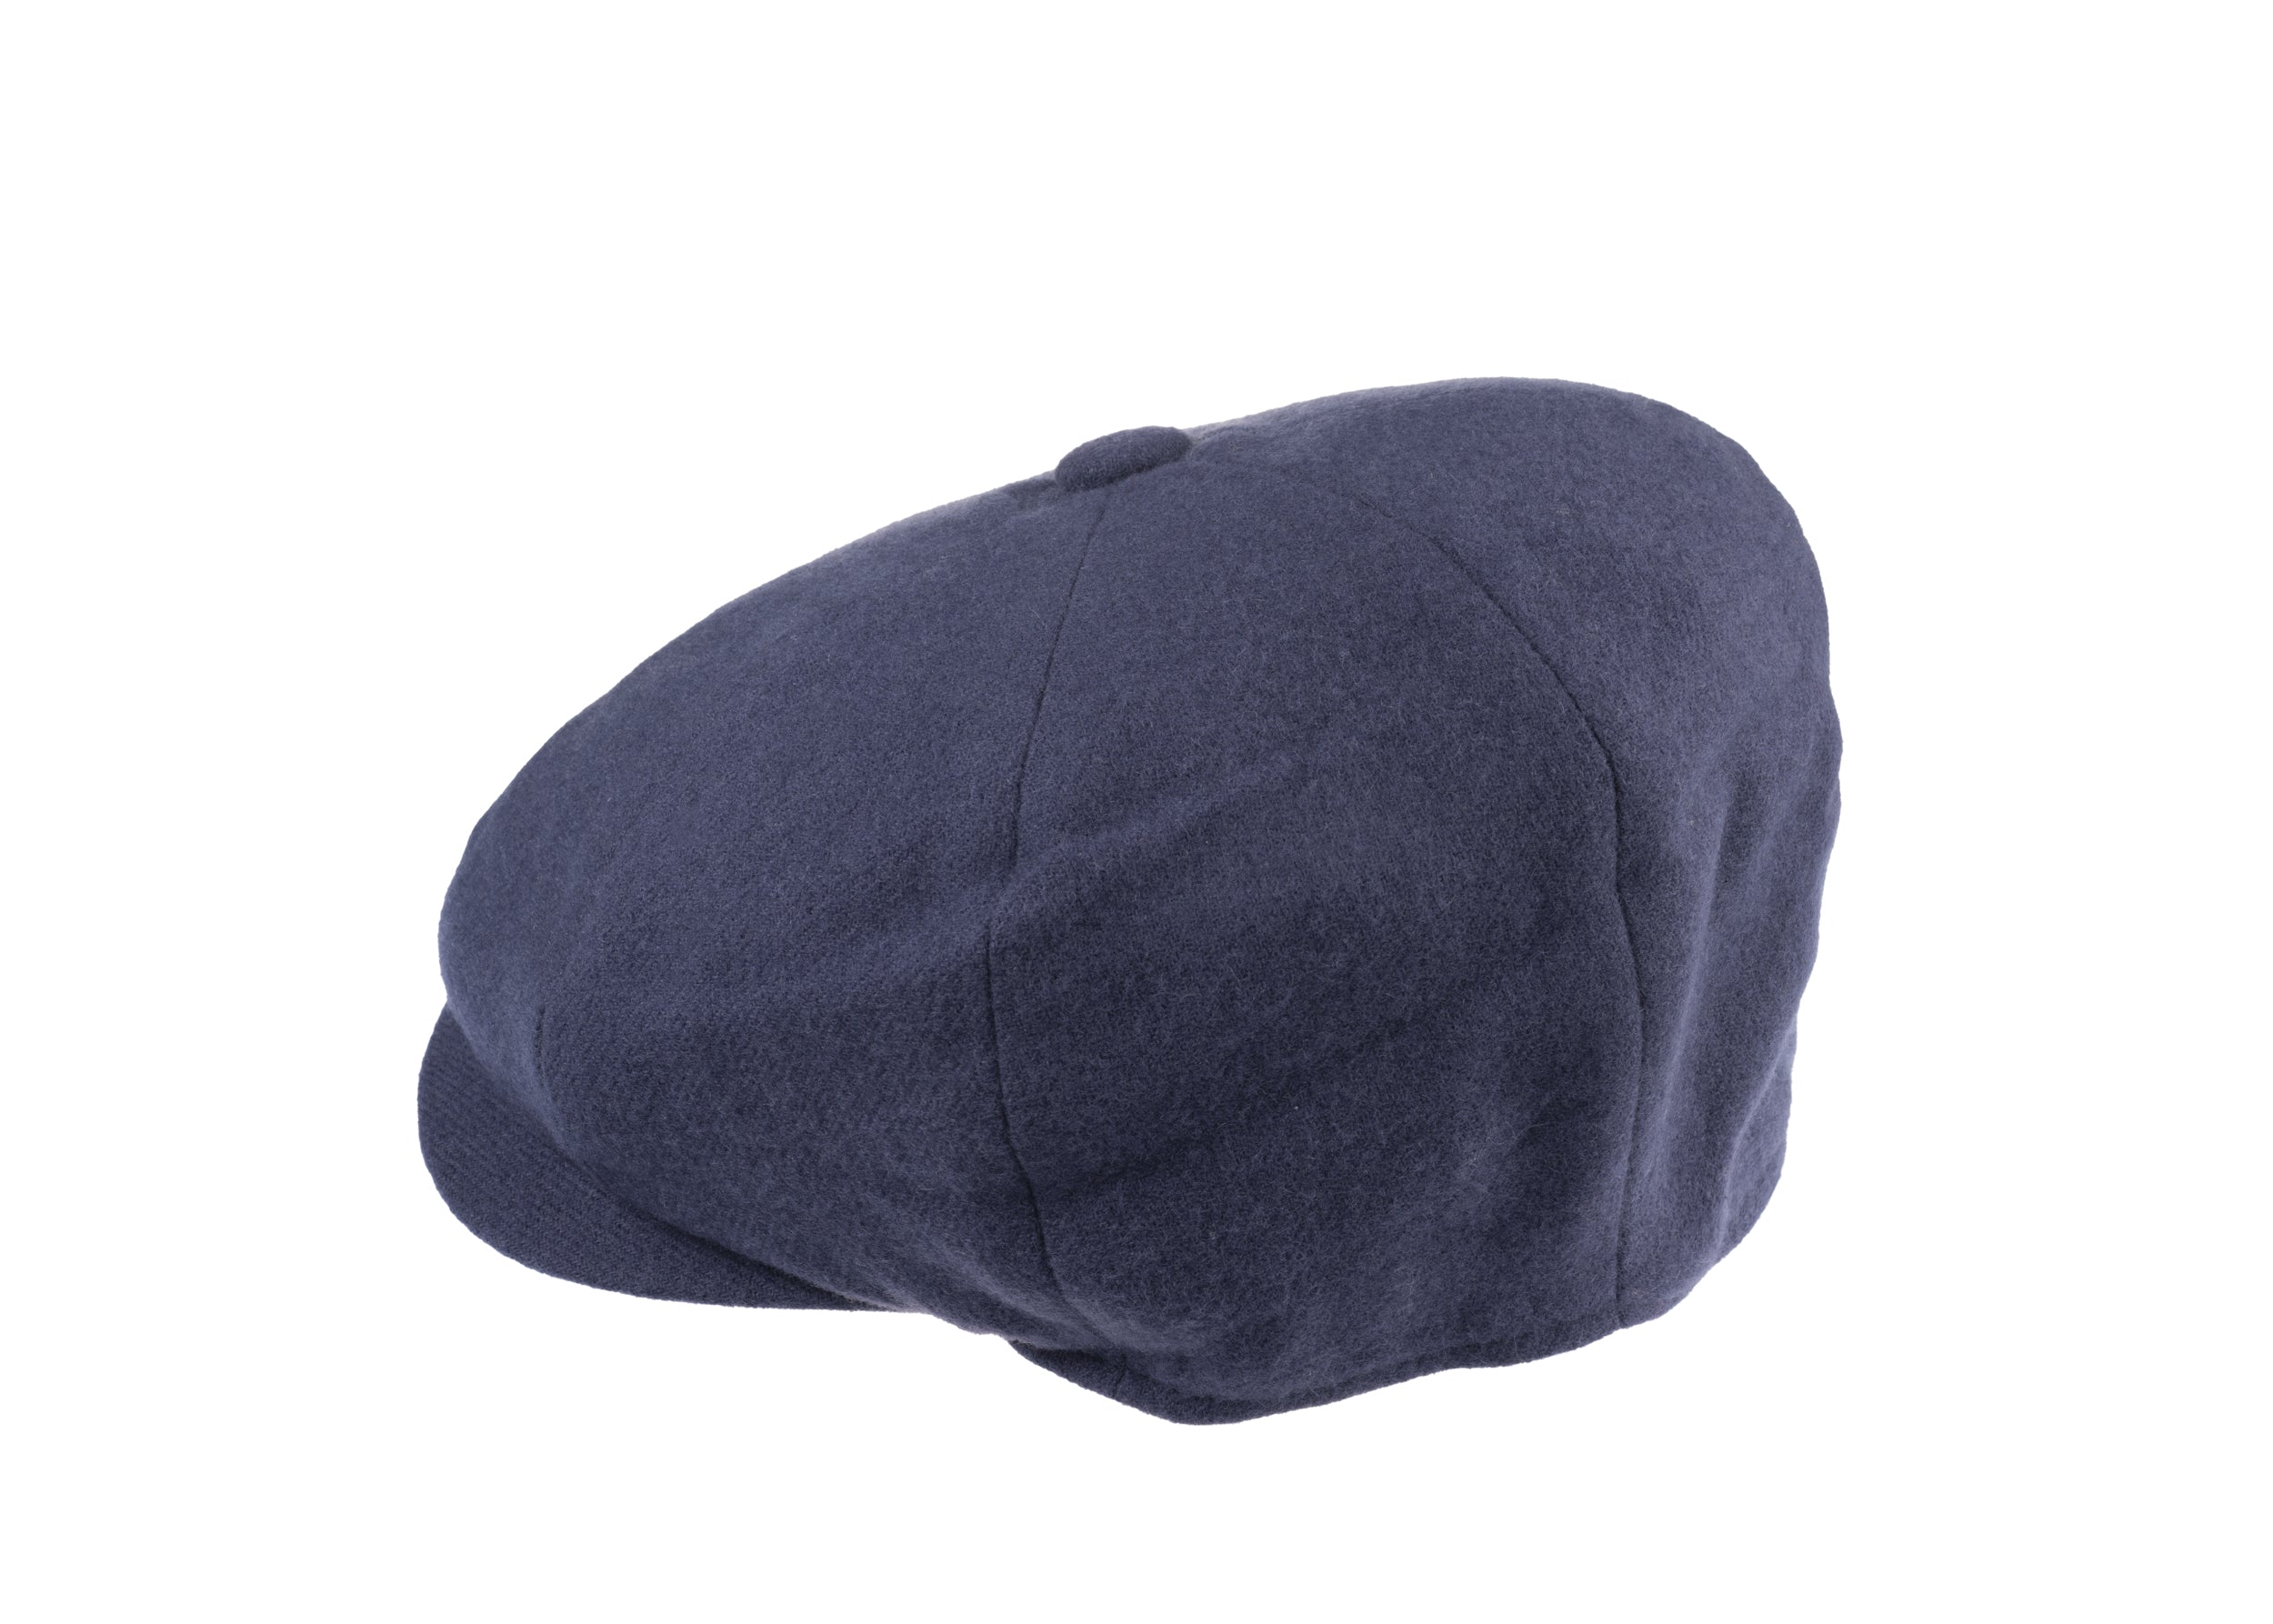 Josh 8 piece baker boy cap in cashmere/wool blend fabric in Blue